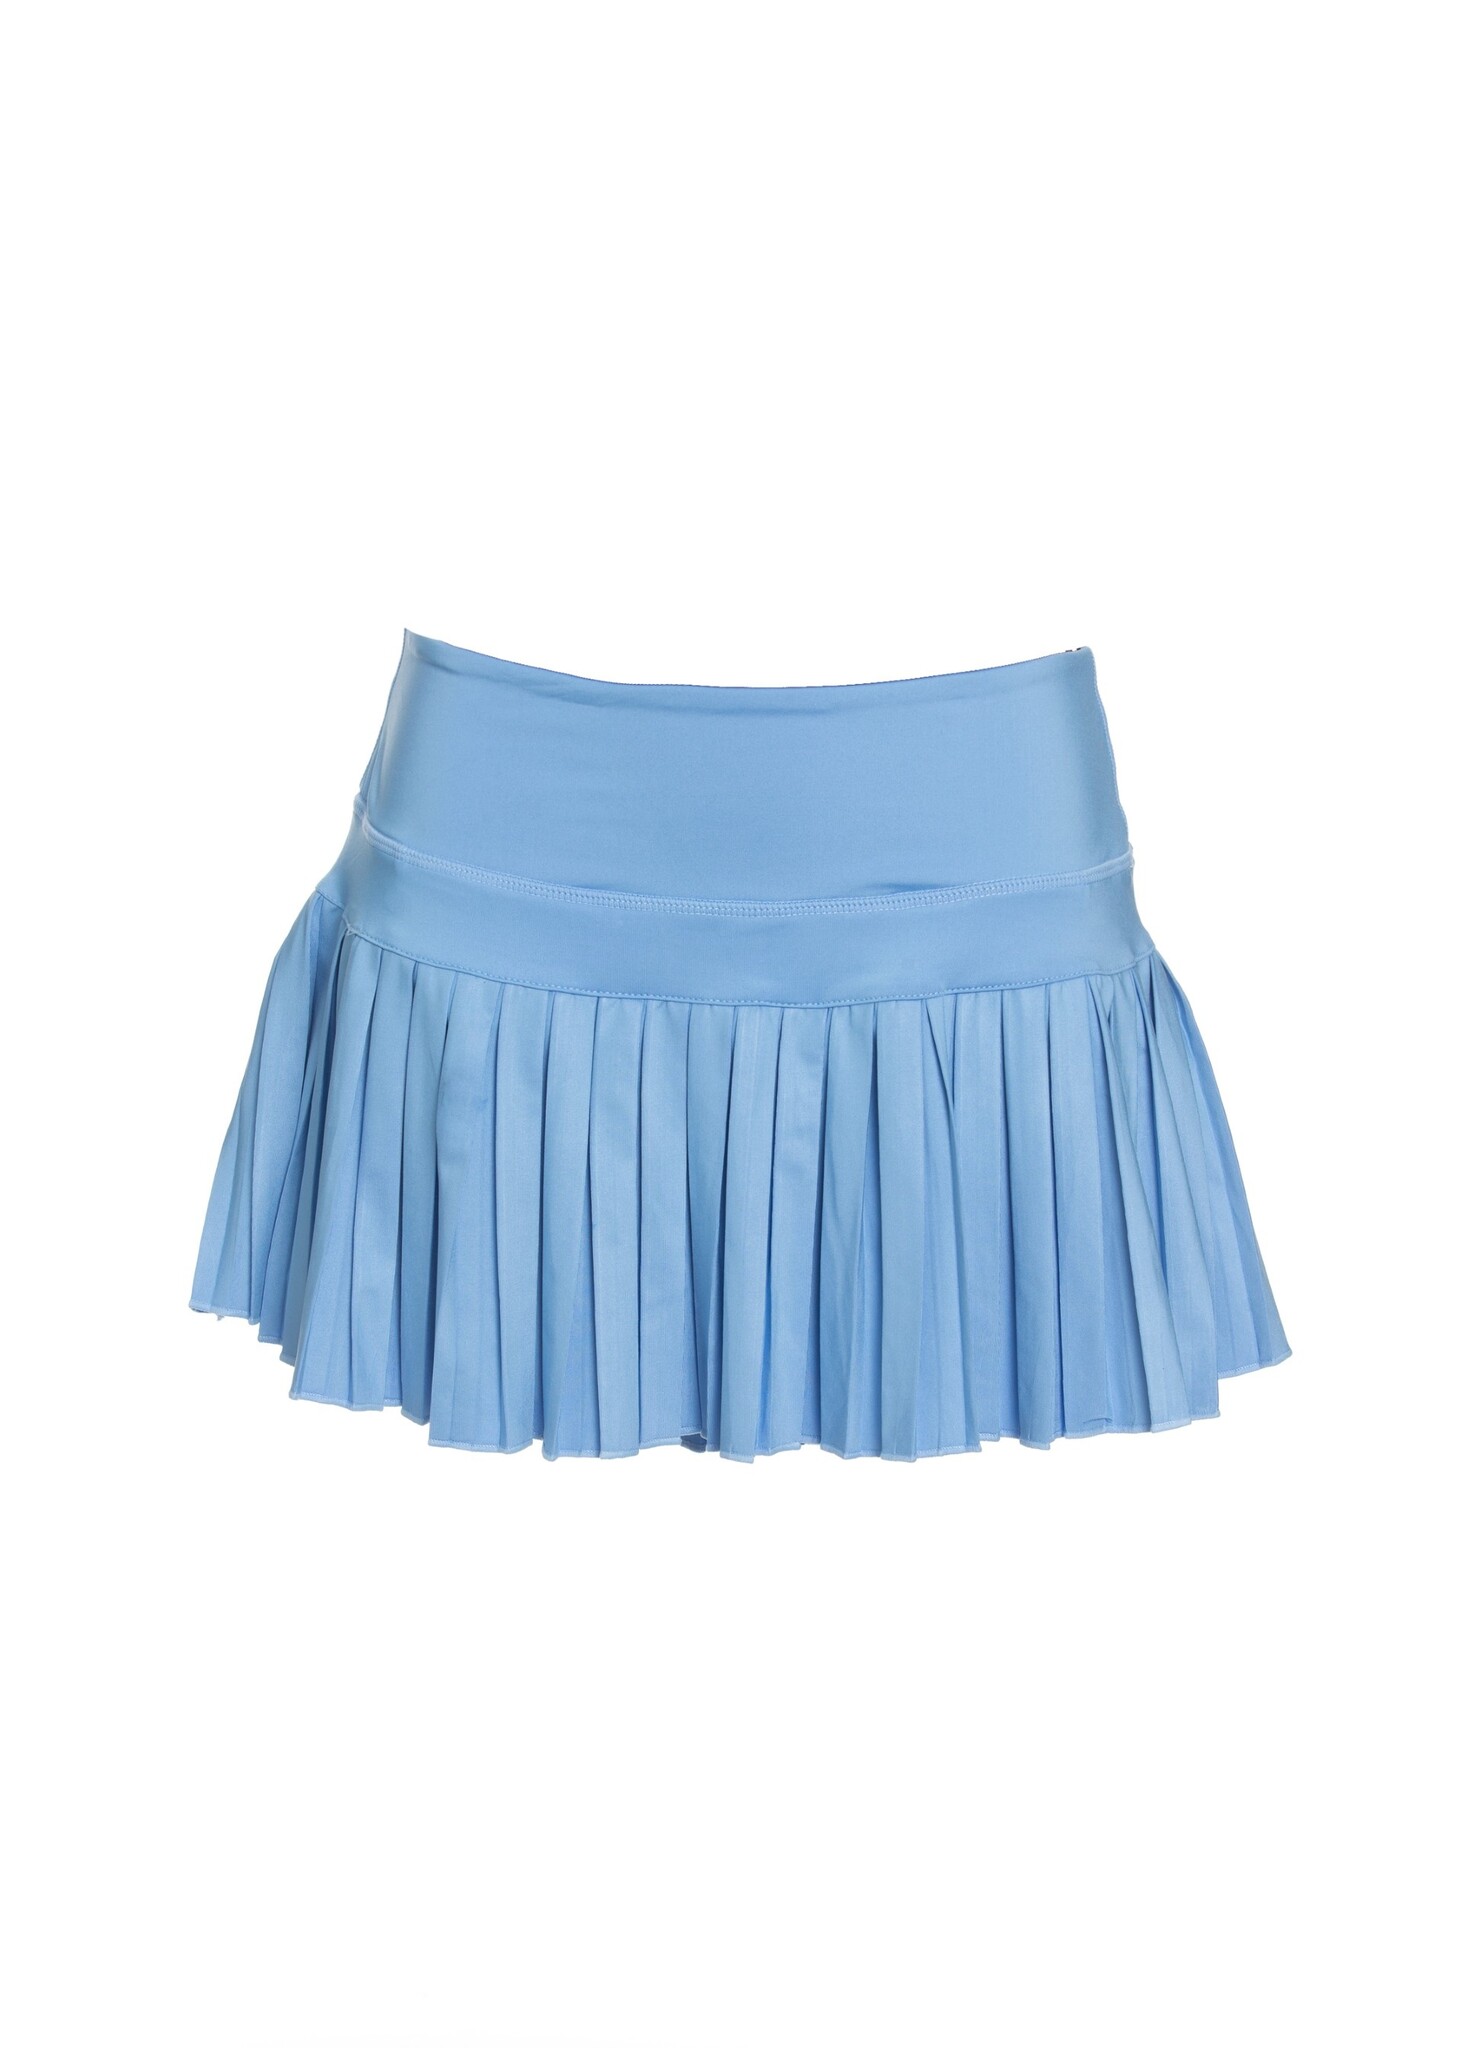 Gold Hinge Olympic Blue Pleated Skirt - Covey House Children's 